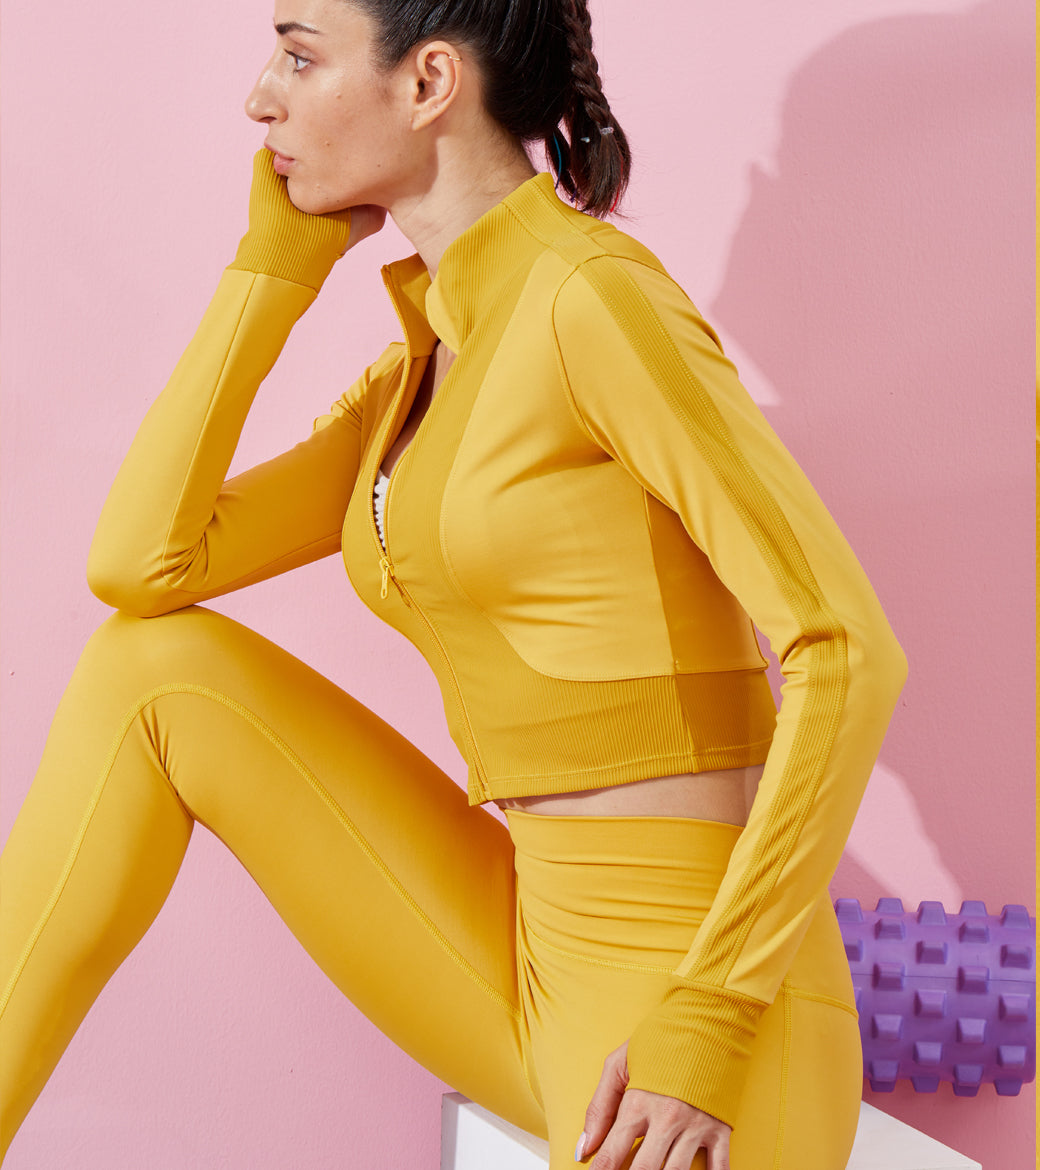 LOVESOFT Women's Heated Wire Yellow Fitness Gym Jacket